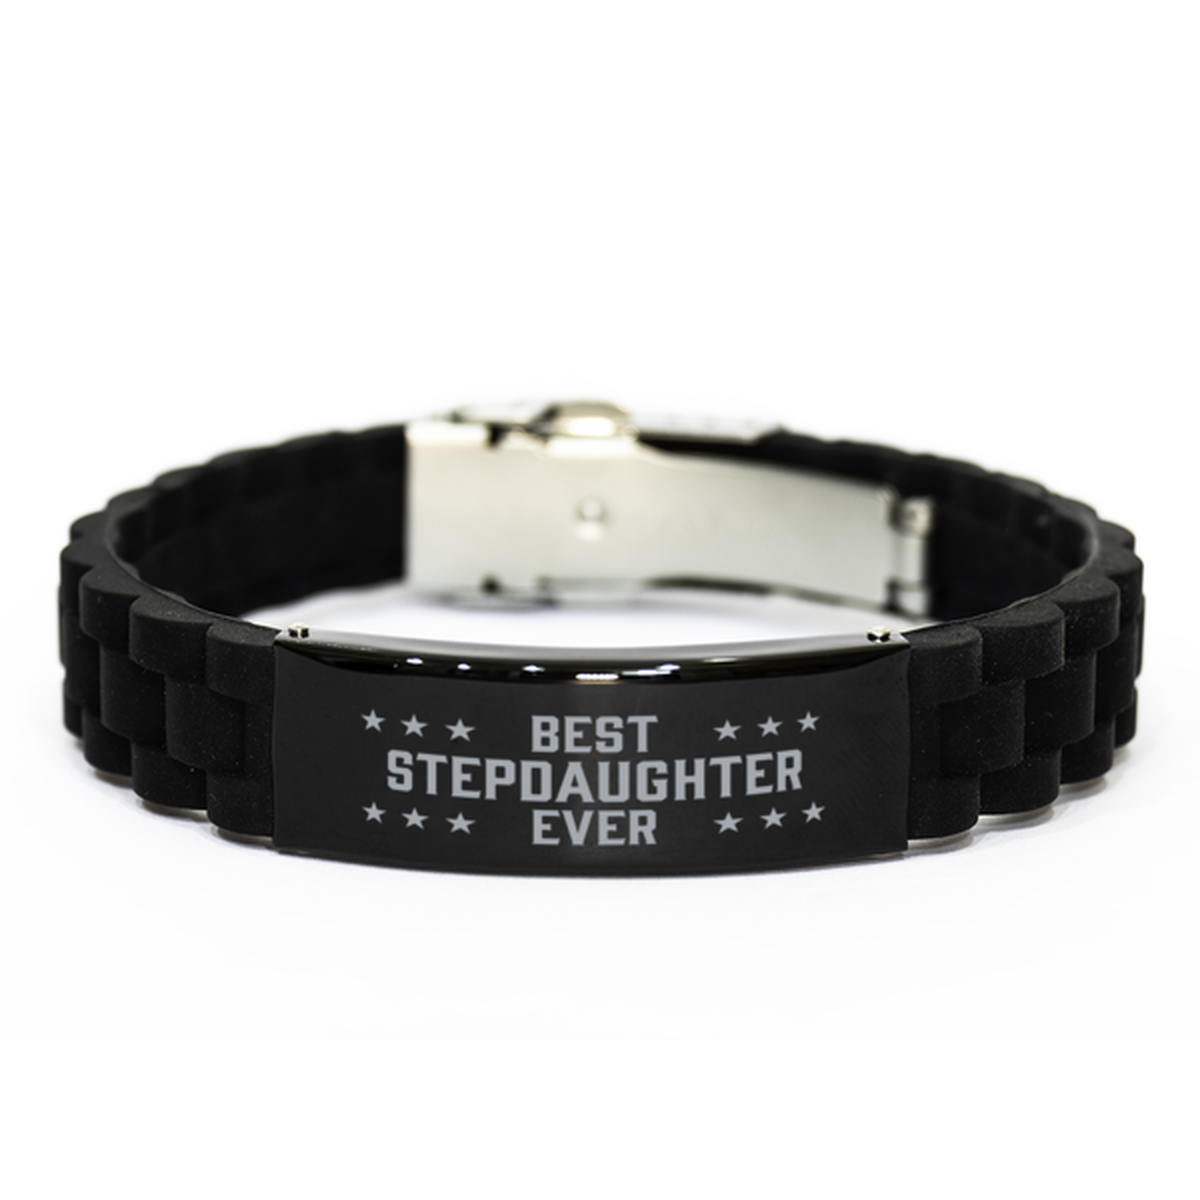 Best Stepdaughter Ever Stepdaughter Gifts, Funny Black Engraved Bracelet For Stepdaughter, Family Gifts For Women